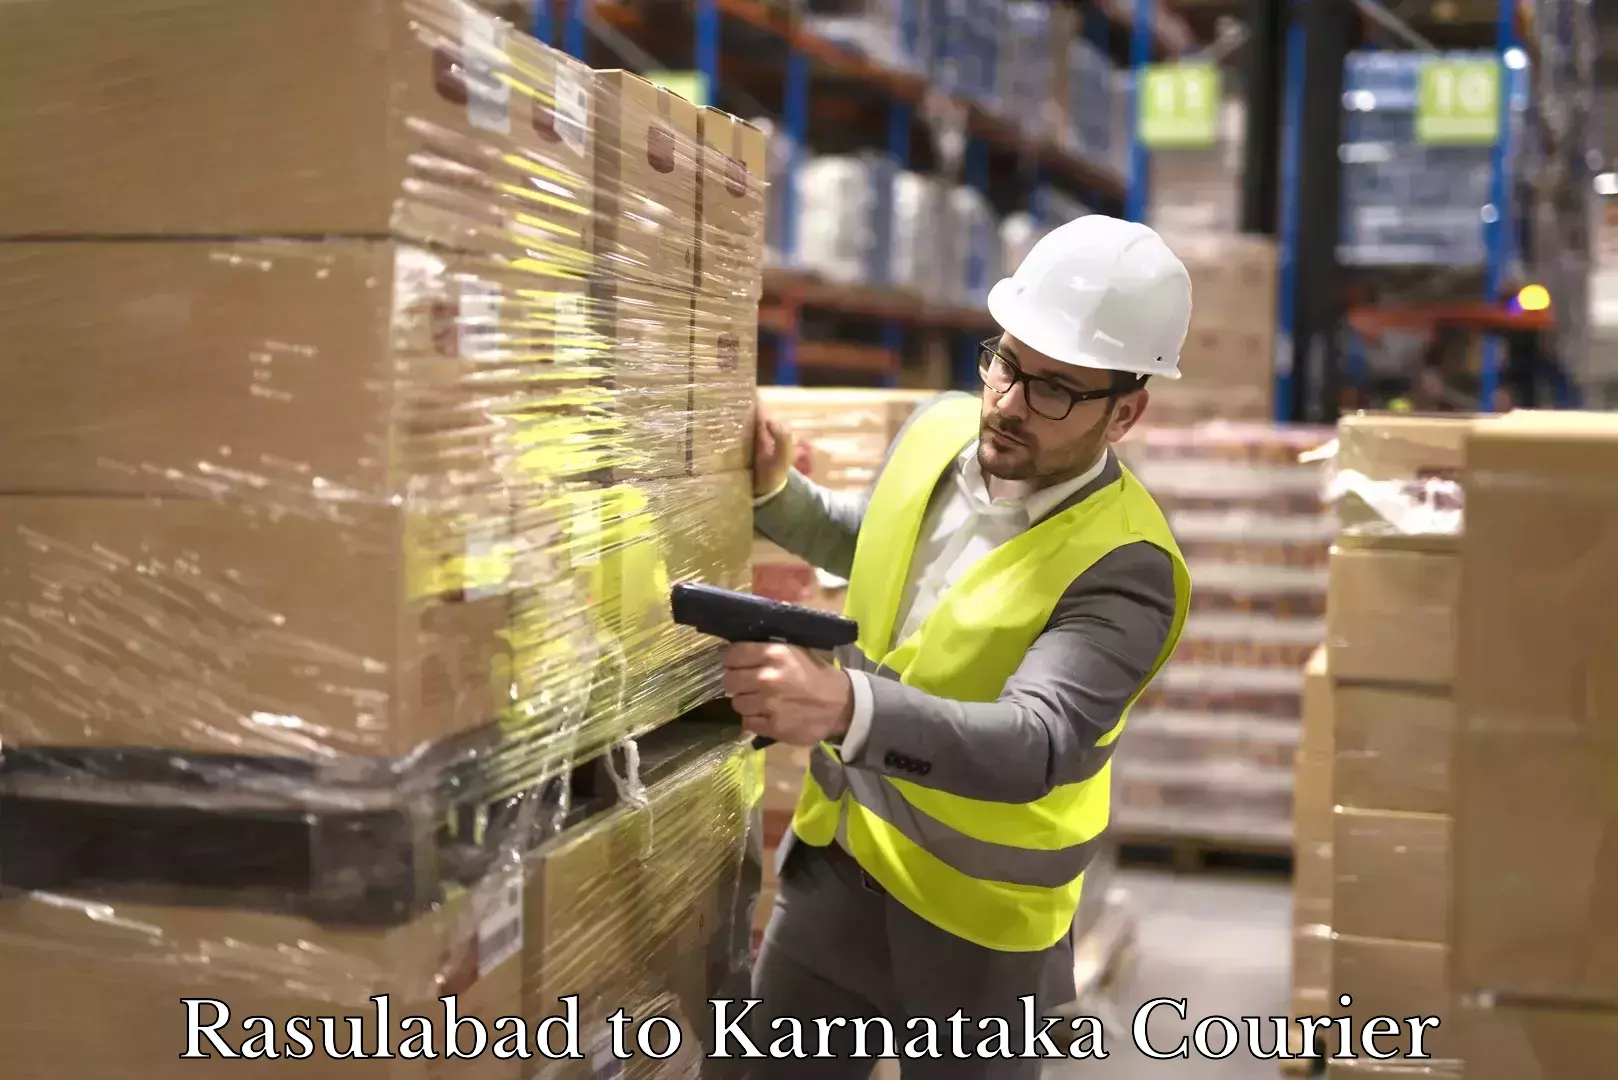 Global courier networks Rasulabad to Karnataka